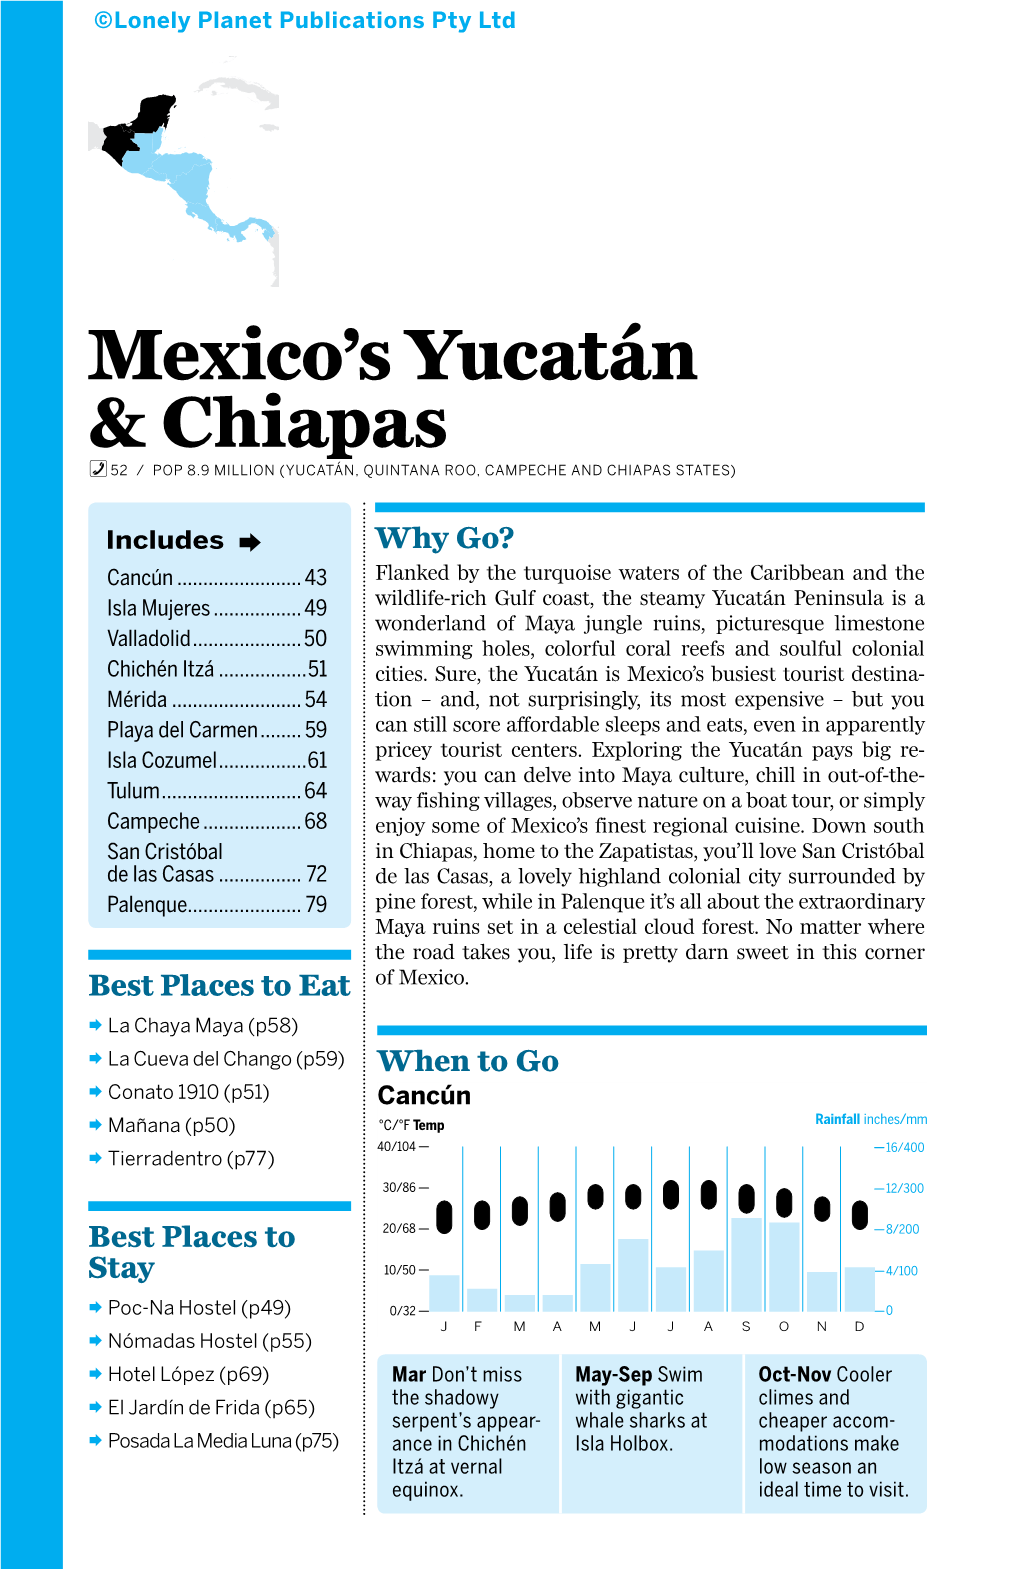 Mexico's Yucatán & Chiapas